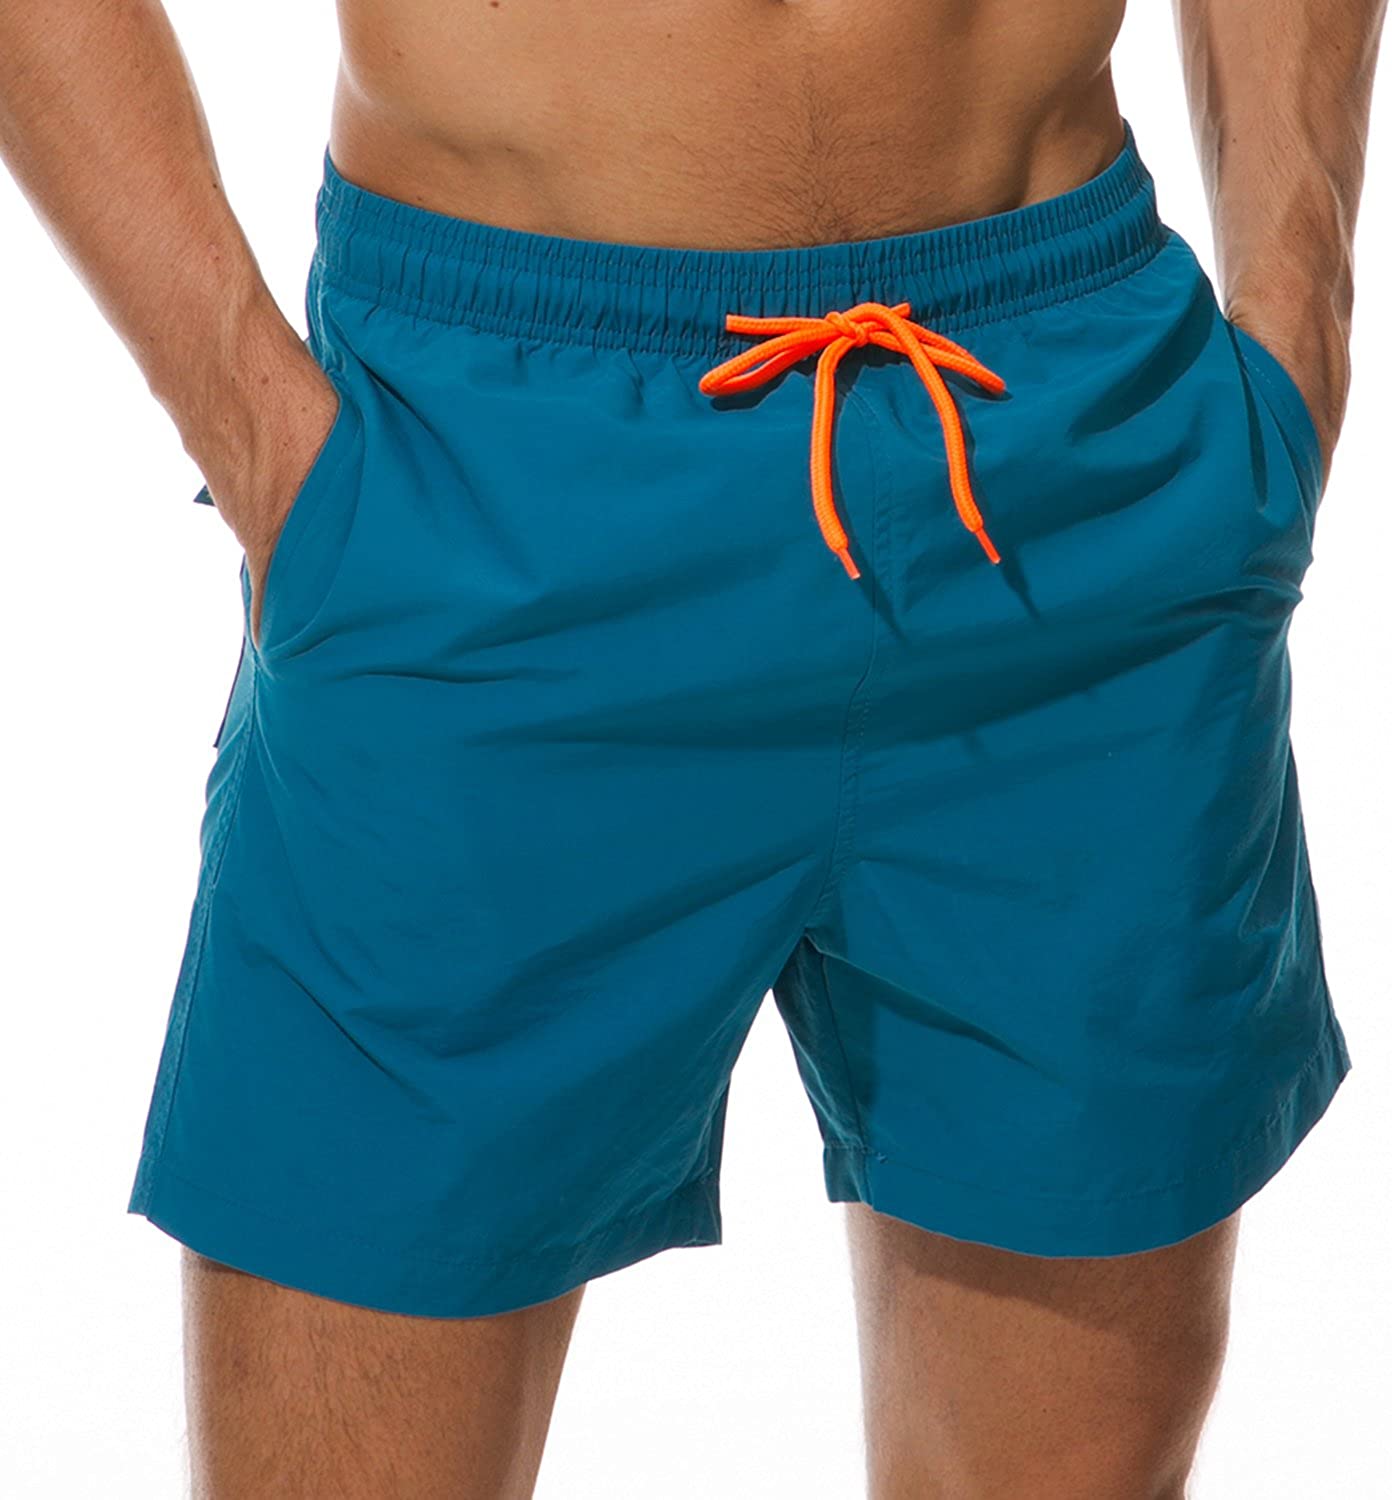 SILKWORLD Men's Swim Trunks Quick Dry Beach Shorts with Pockets | eBay